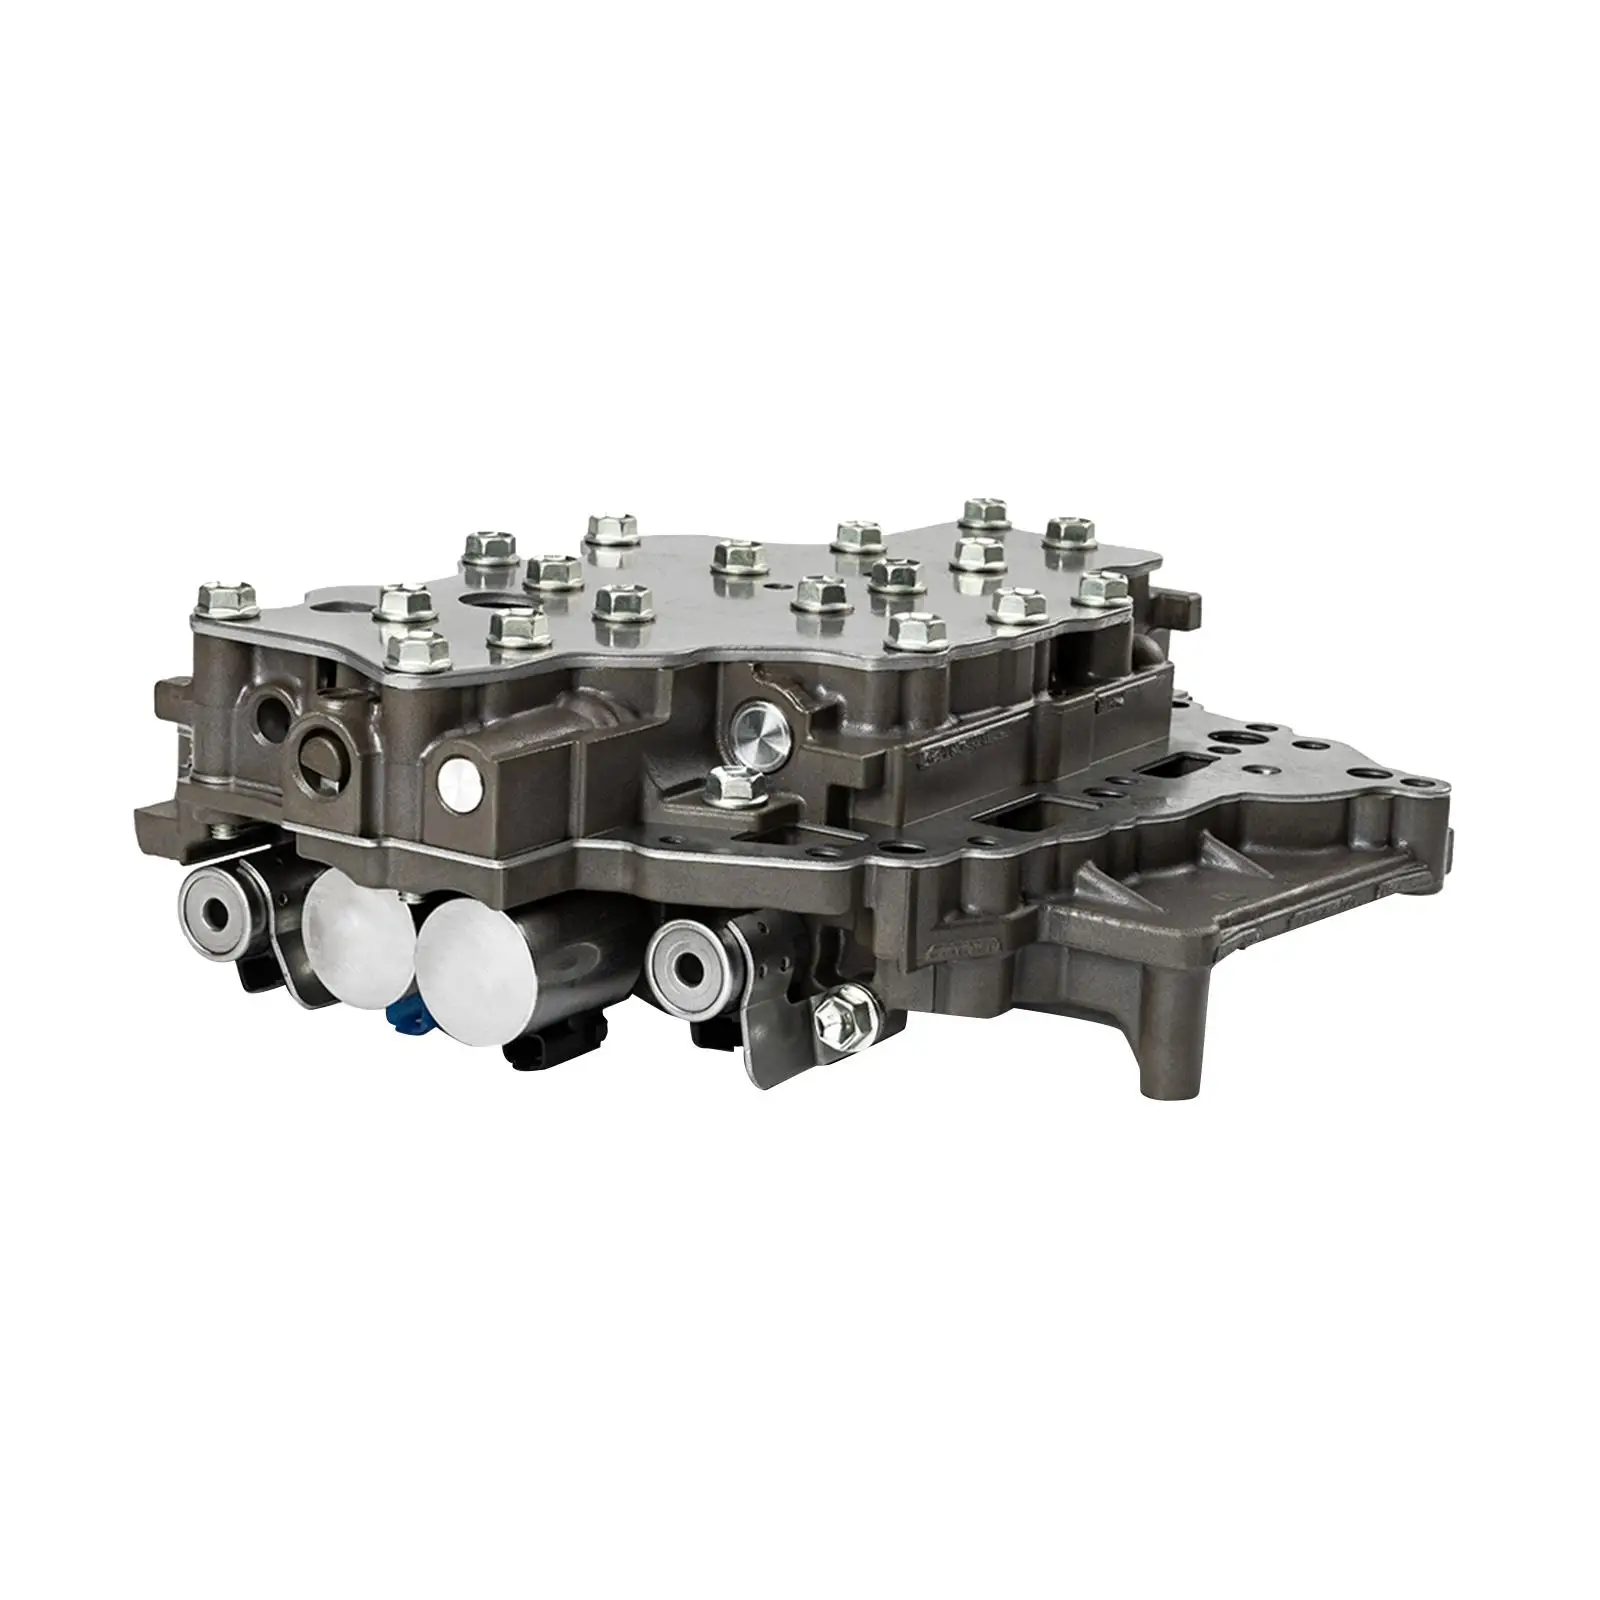 Automatic Transmission Gearbox Valve Body Cvt K313 for Toyota Auris1.2L